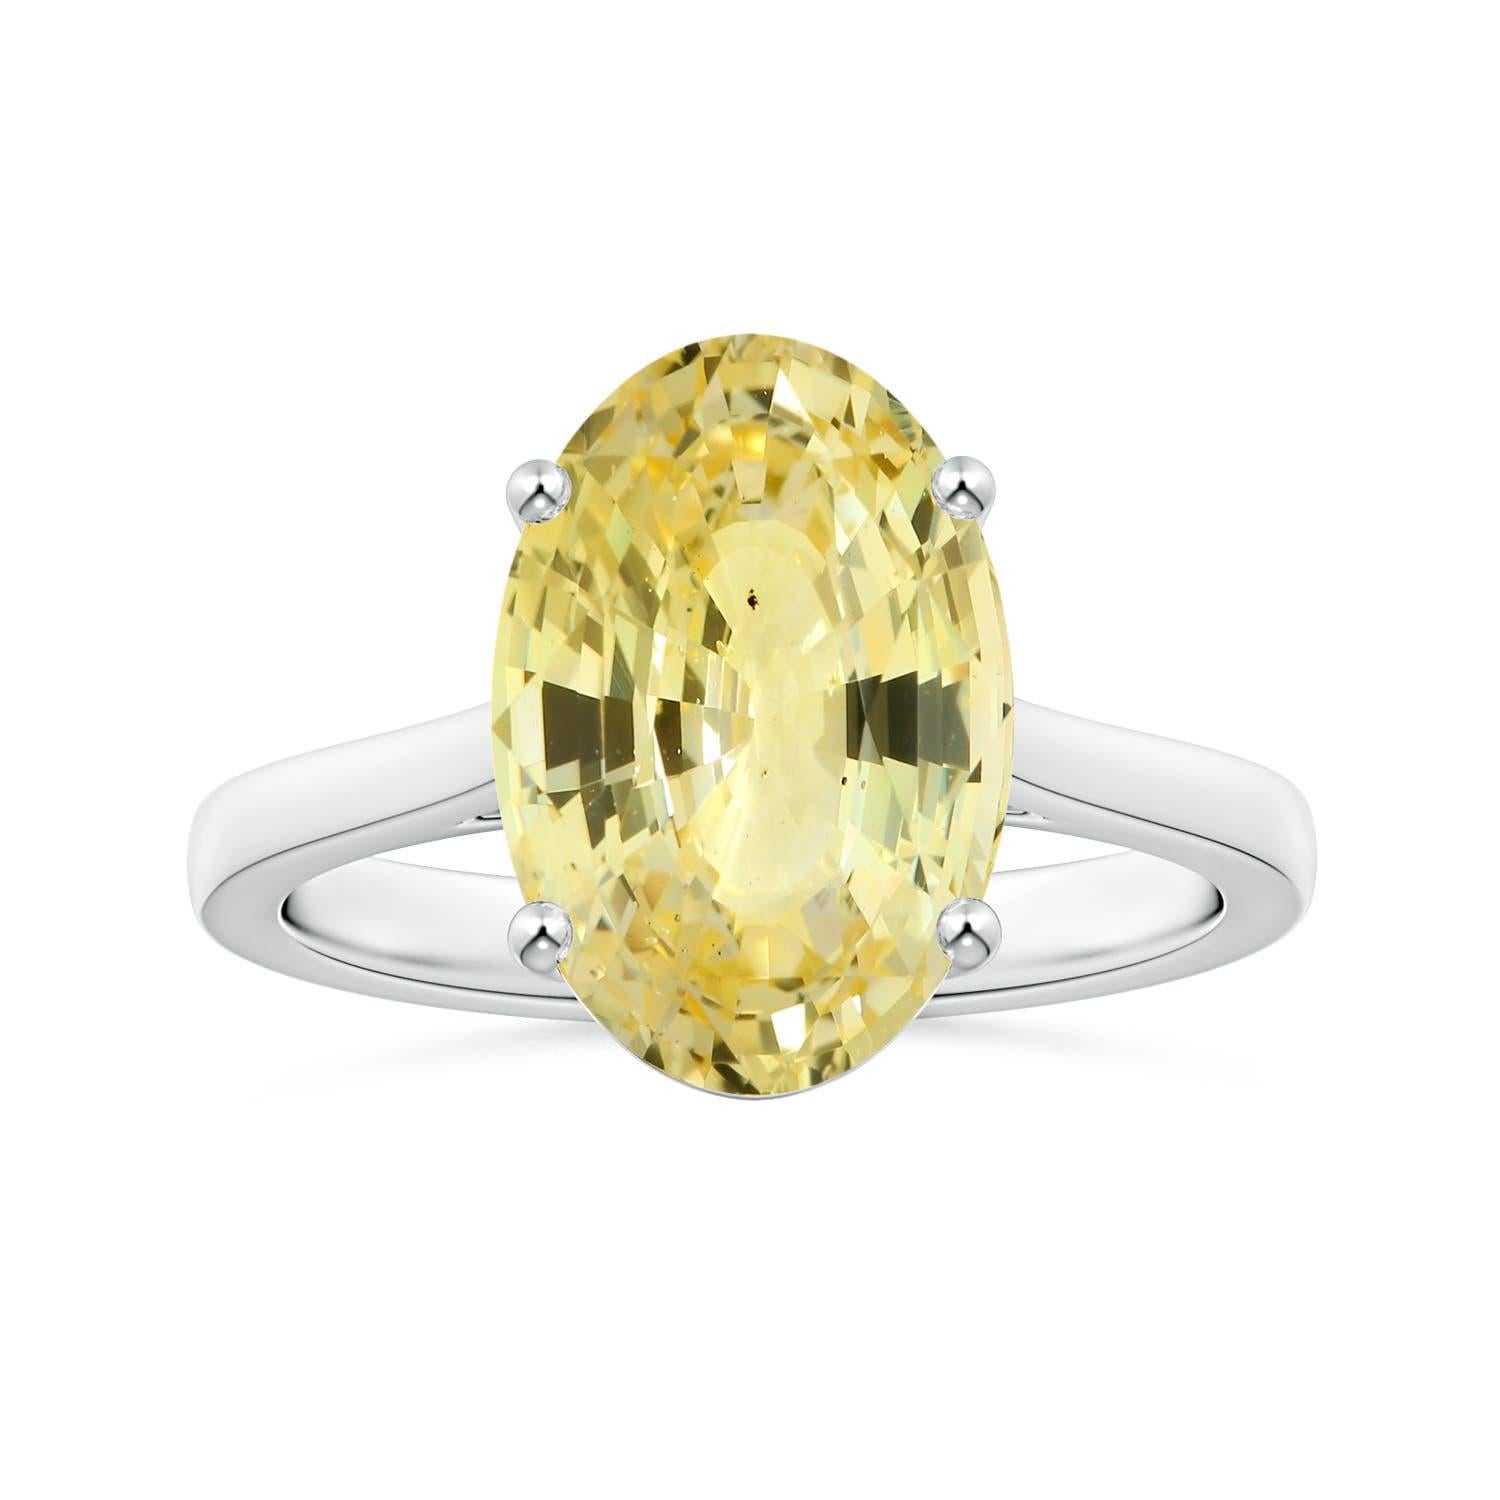 ANGARA GIA Certified Yellow Sapphire Solitaire Ring in Platinum